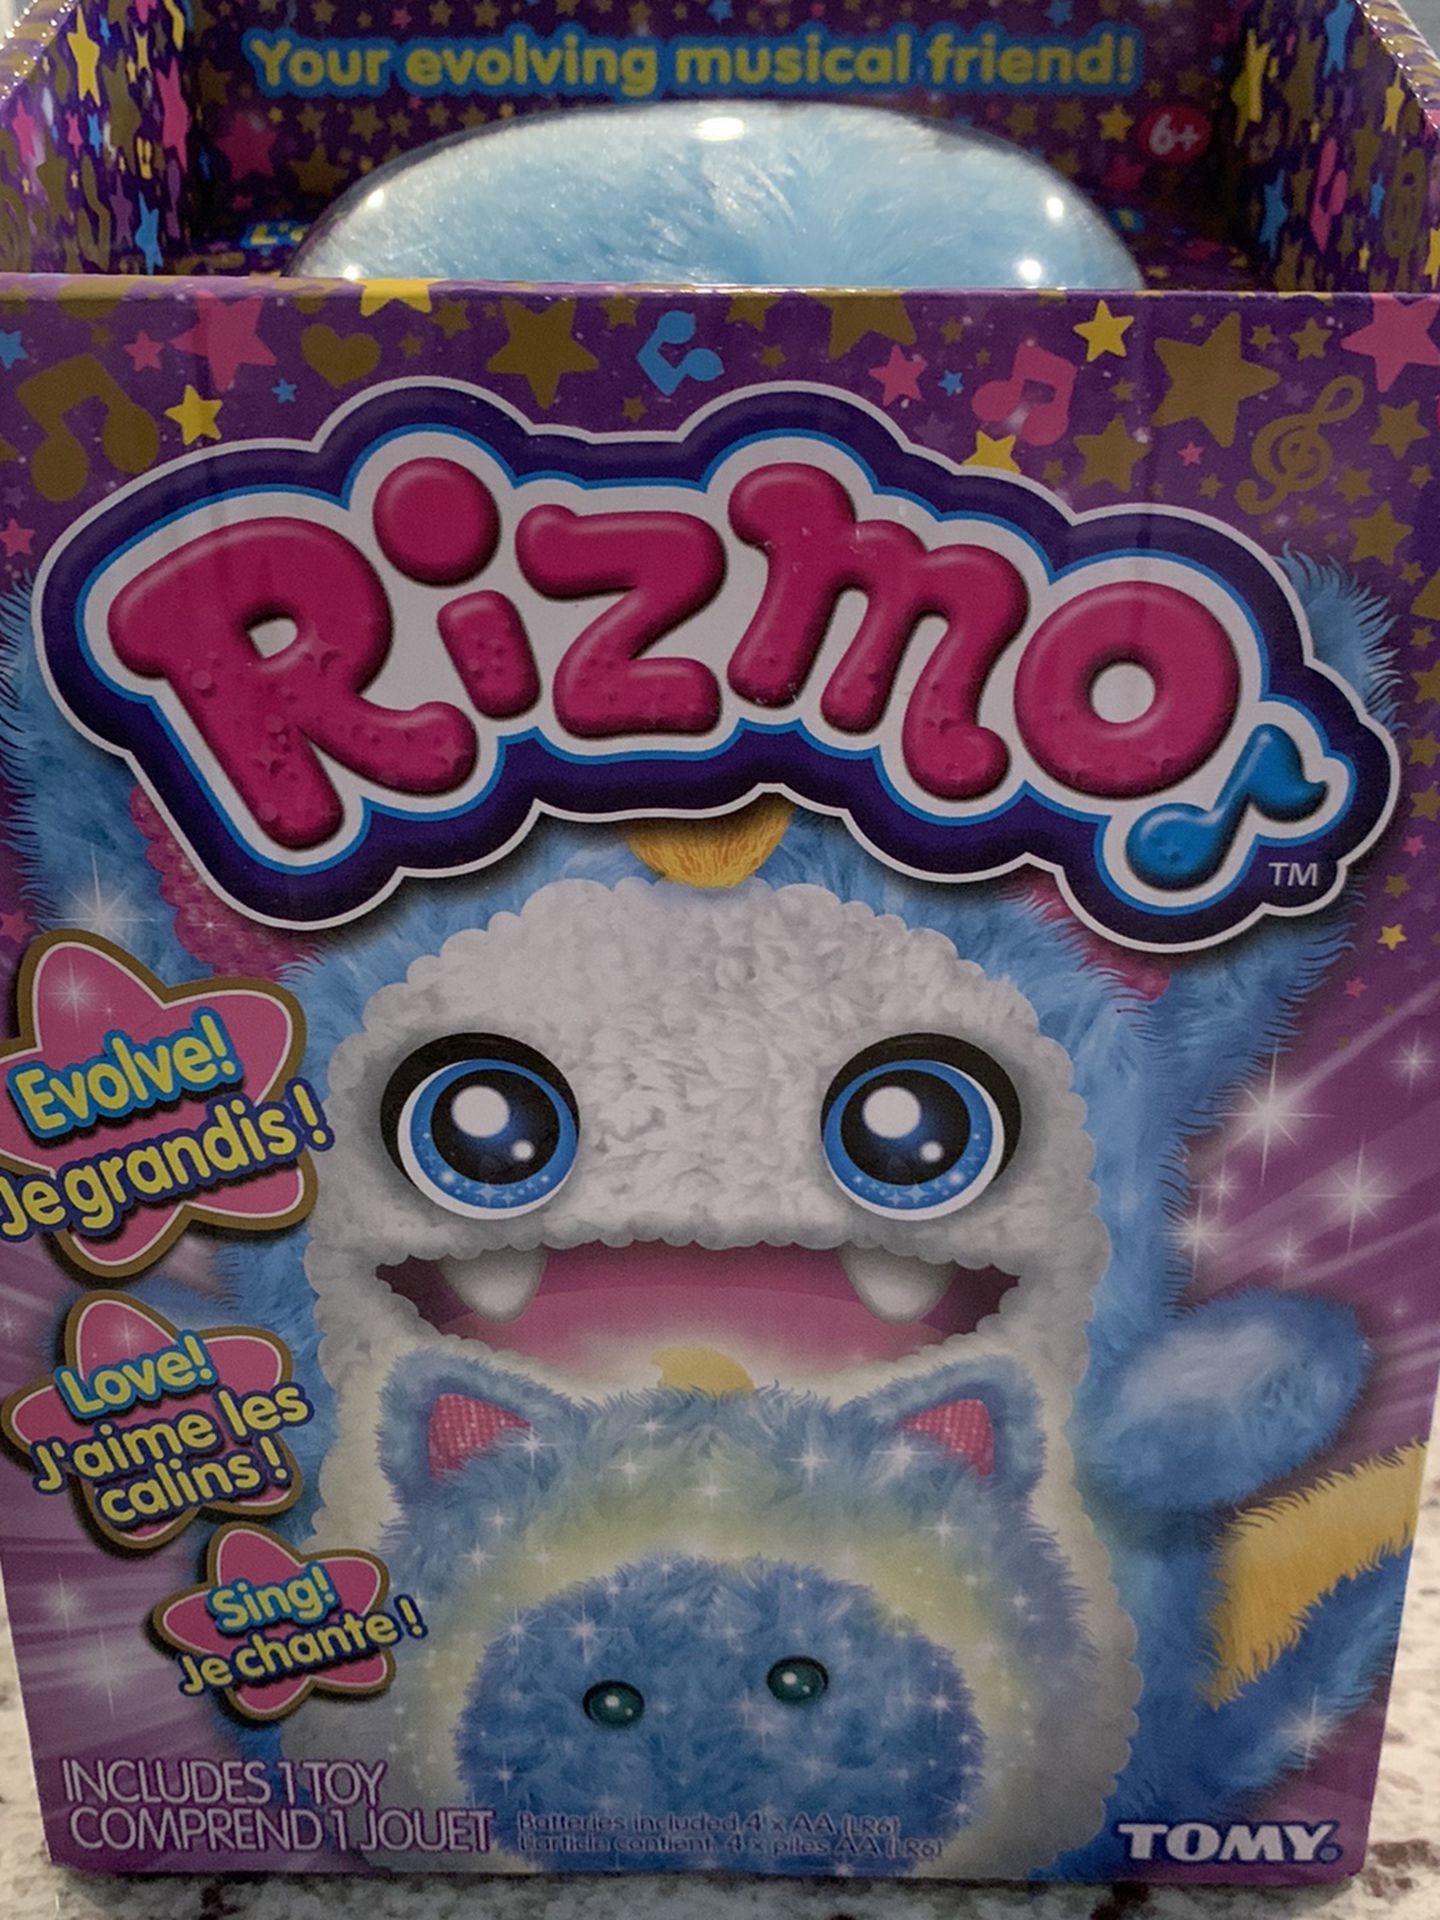 New Rizmo Evolving Musical Friend Interactive Plush Toy with Fun Games, Aqua